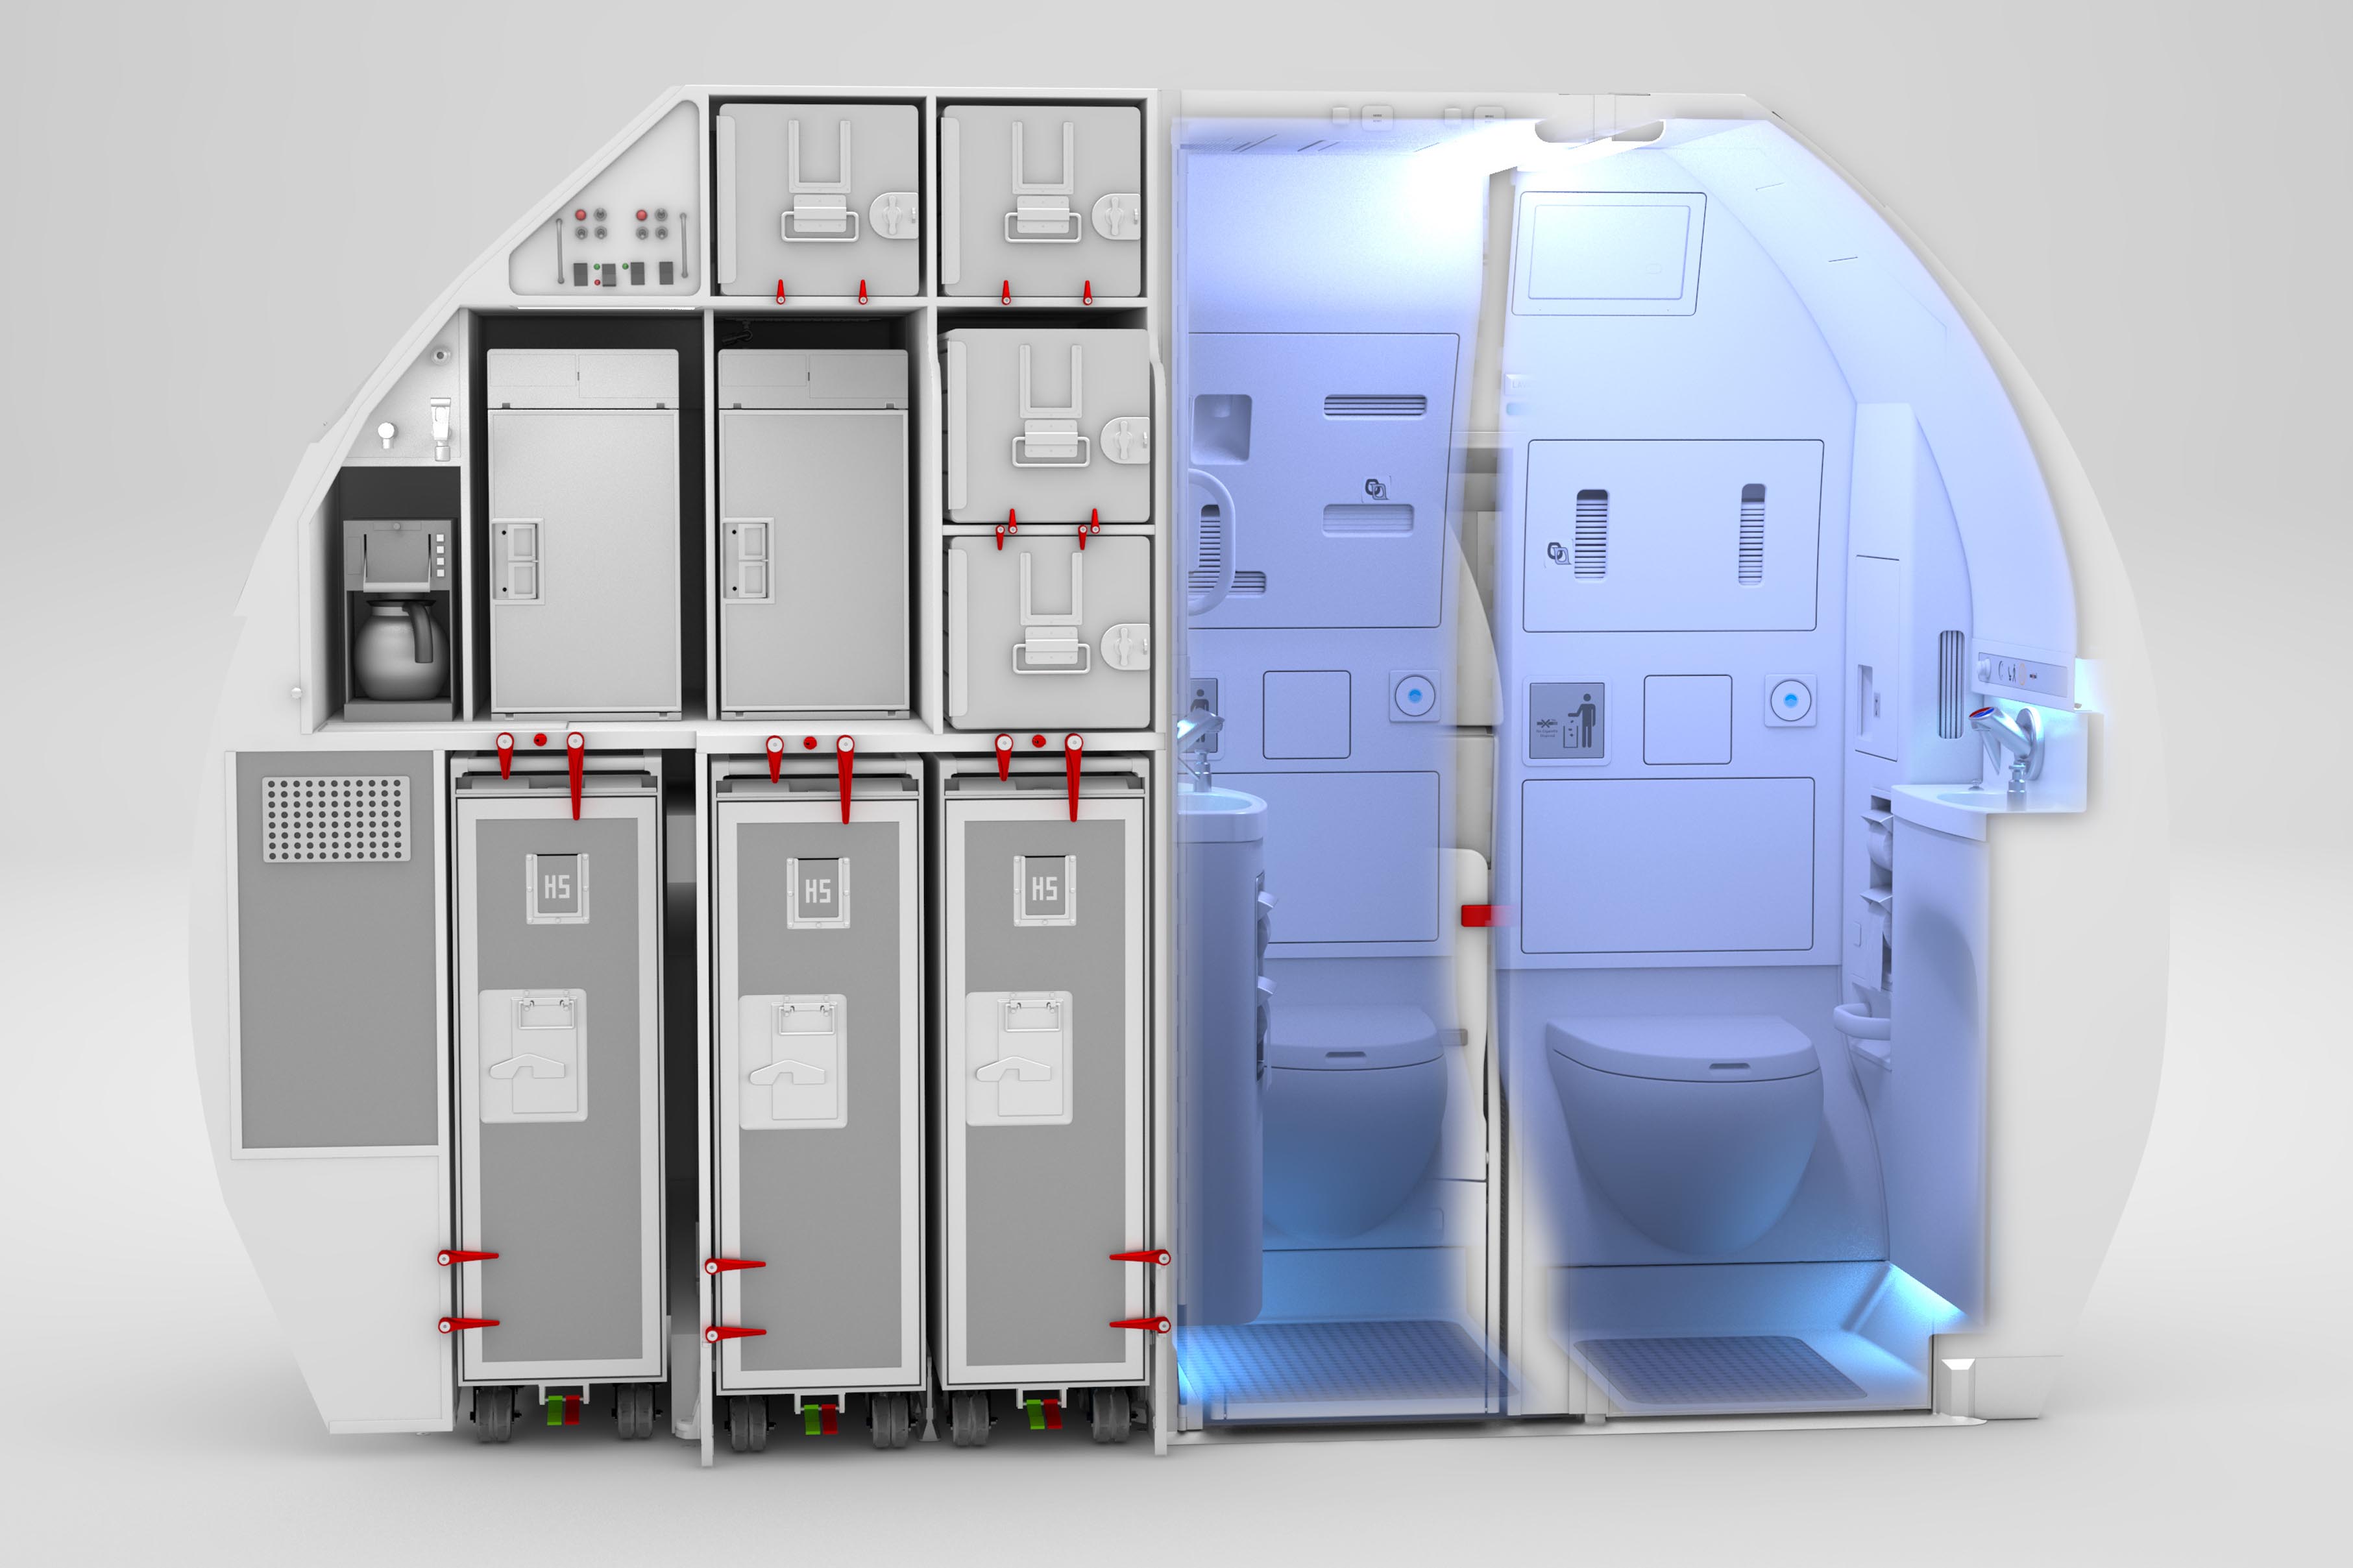 Airbus_SpaceFlex_v2_lavatory_view